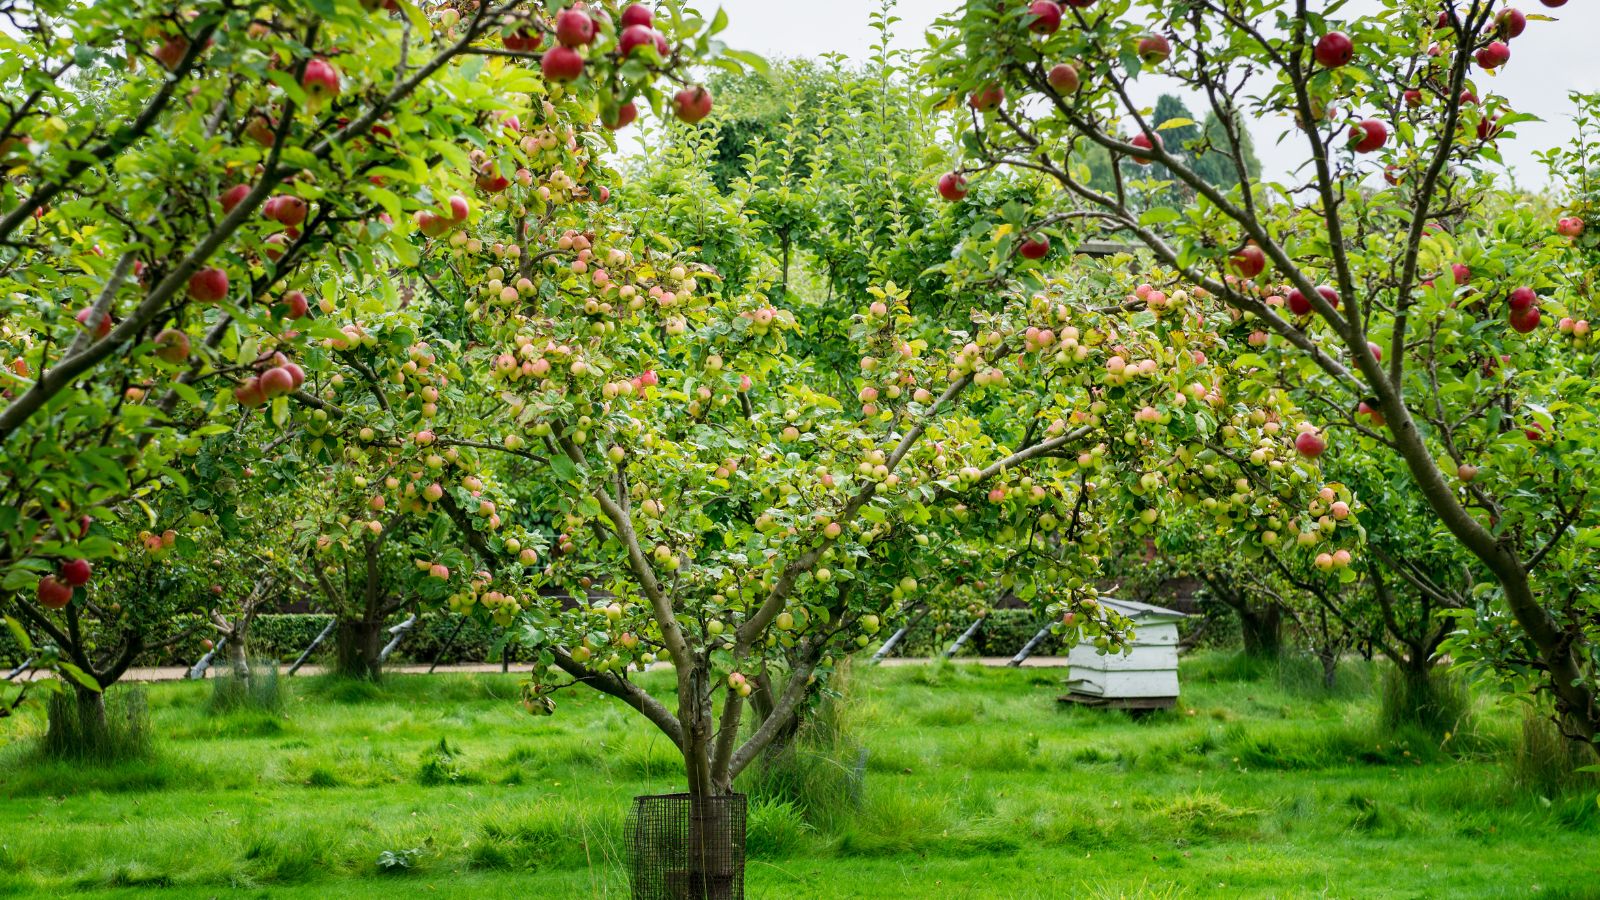 Apple trees growing in a garden.